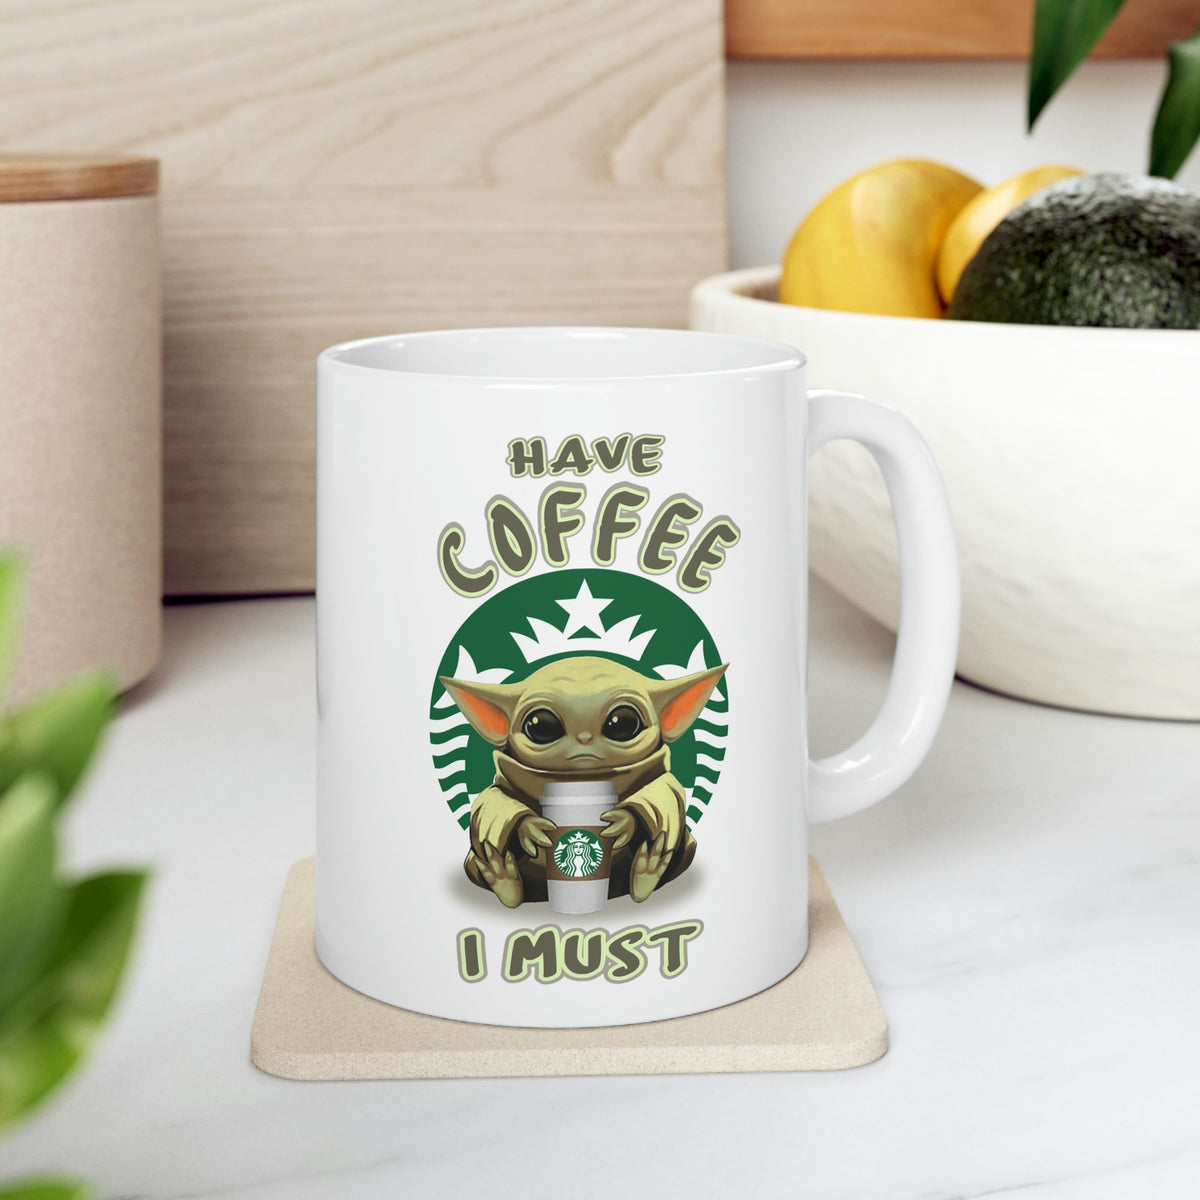 Baby Yoda Coffee I Need Or Slap You I will Mug